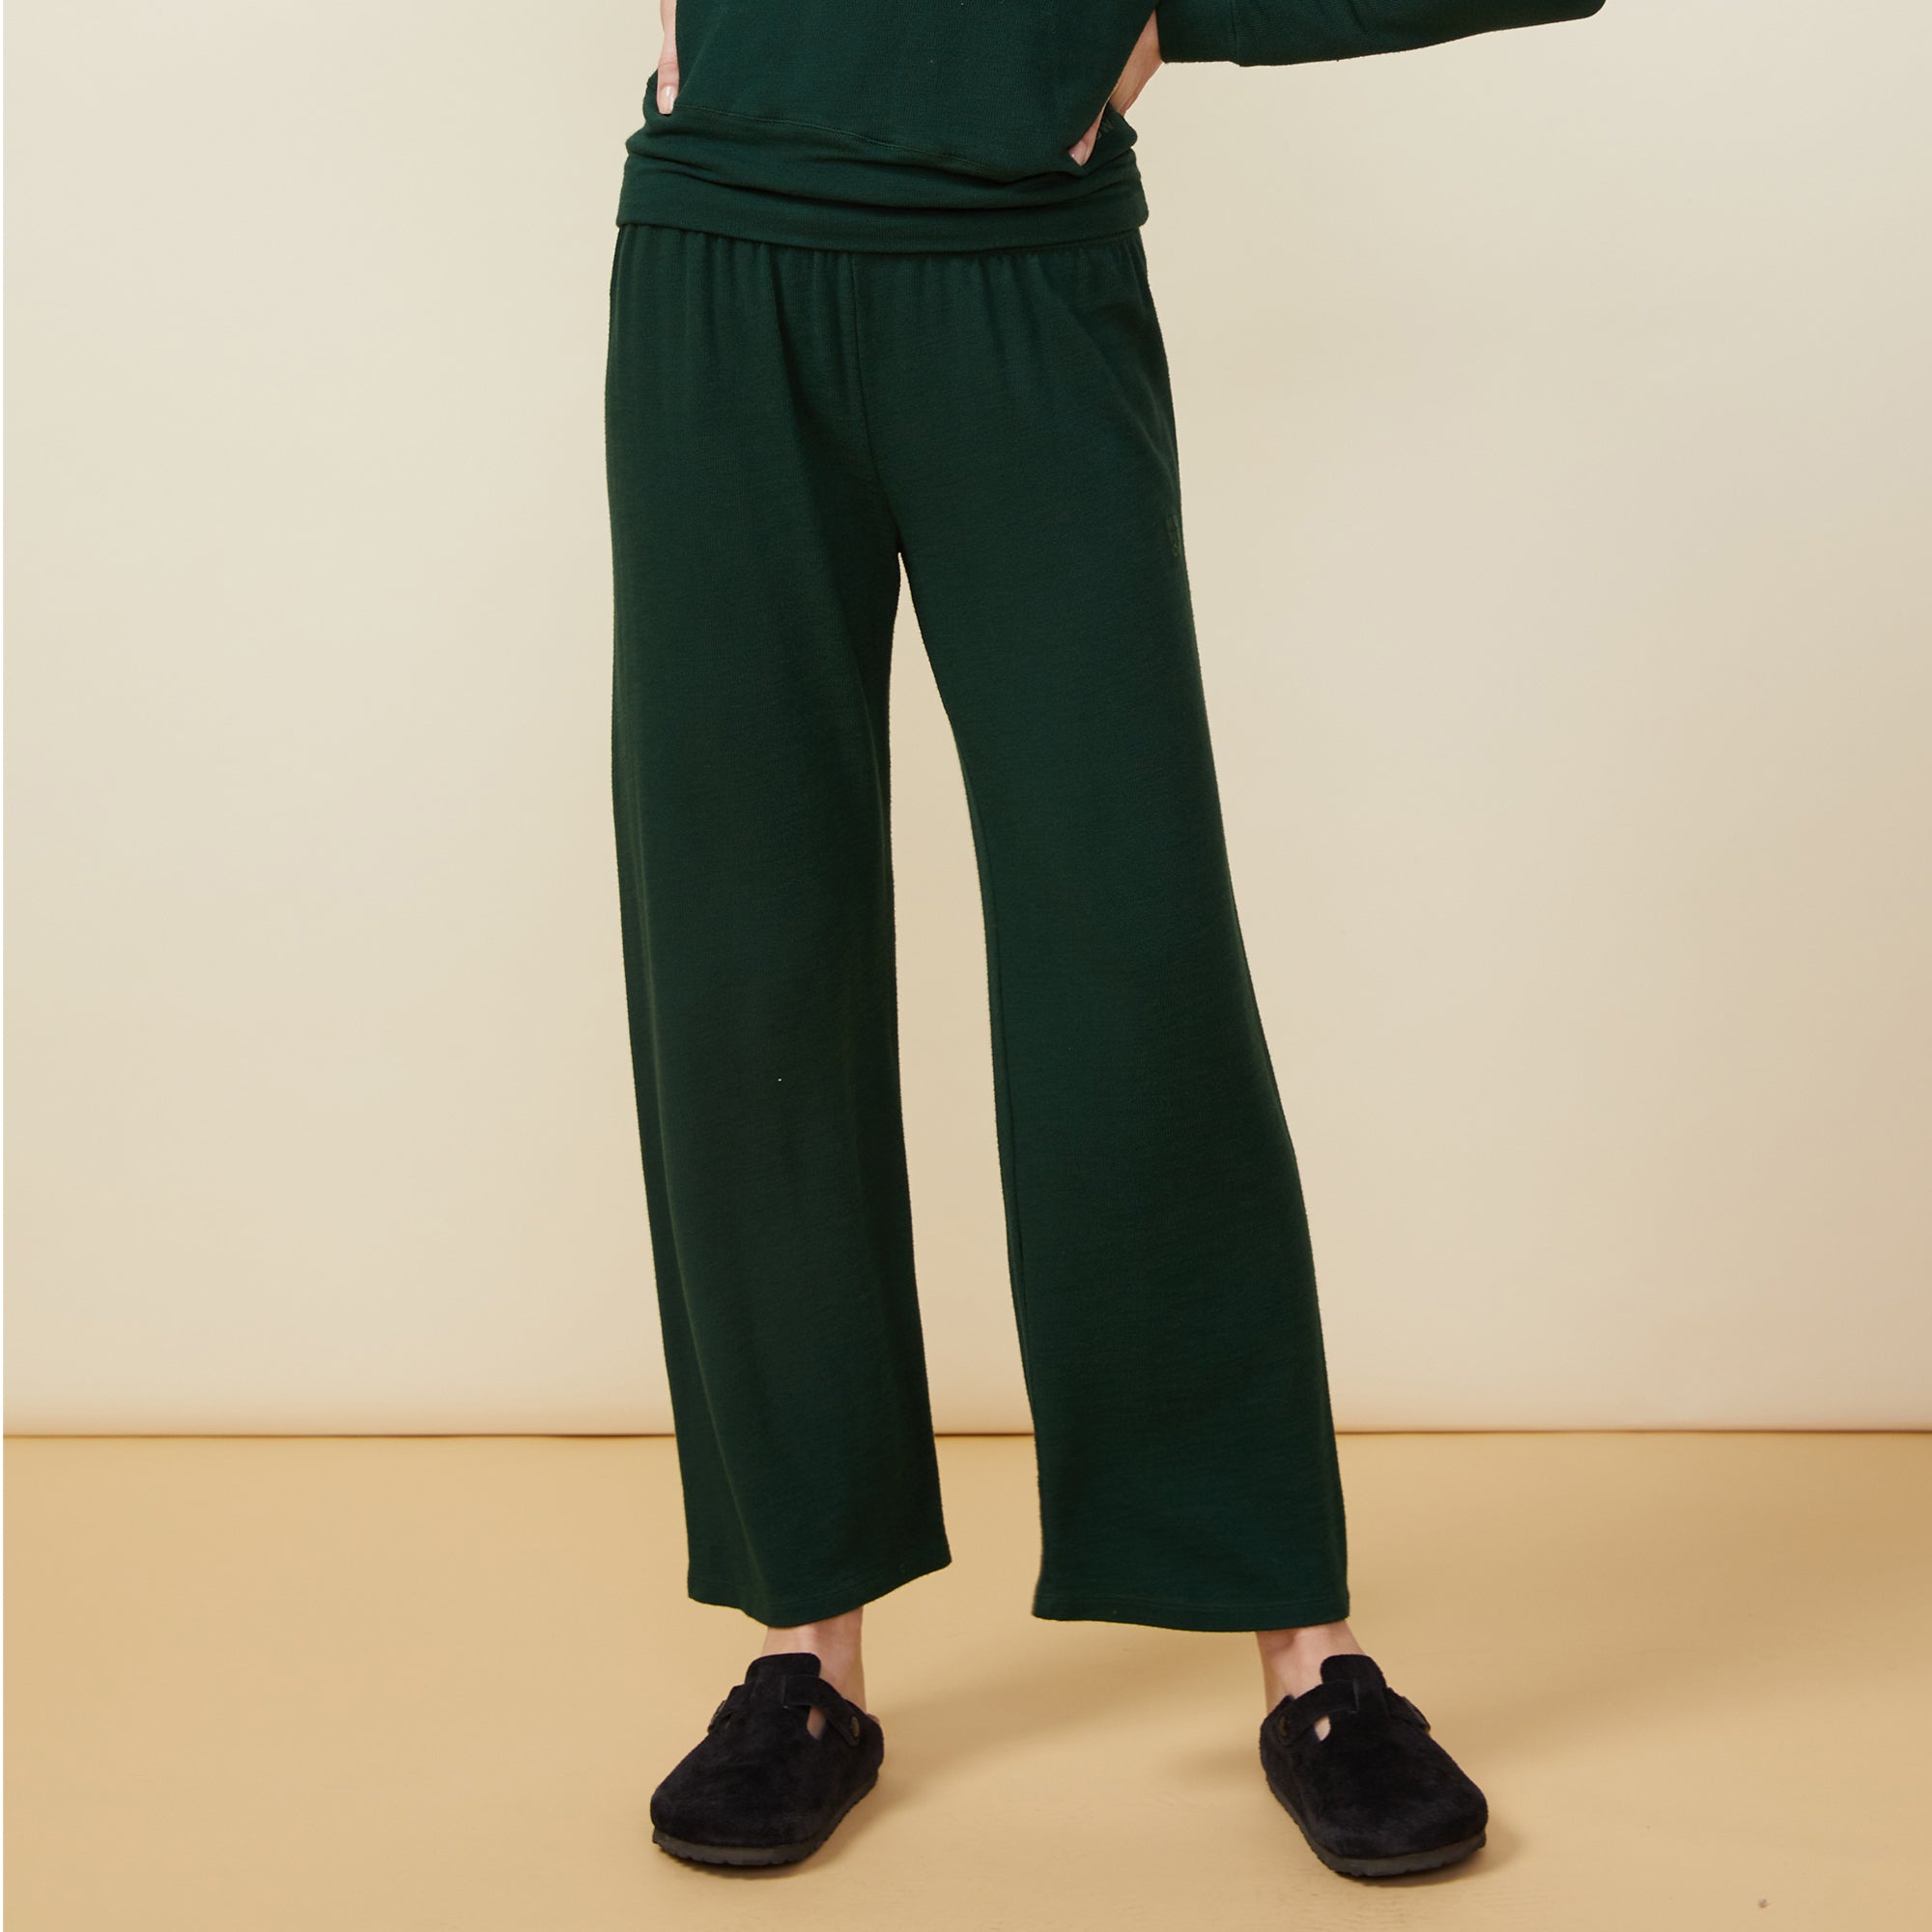 Pretty Lavish pants in green - part of a set | ASOS